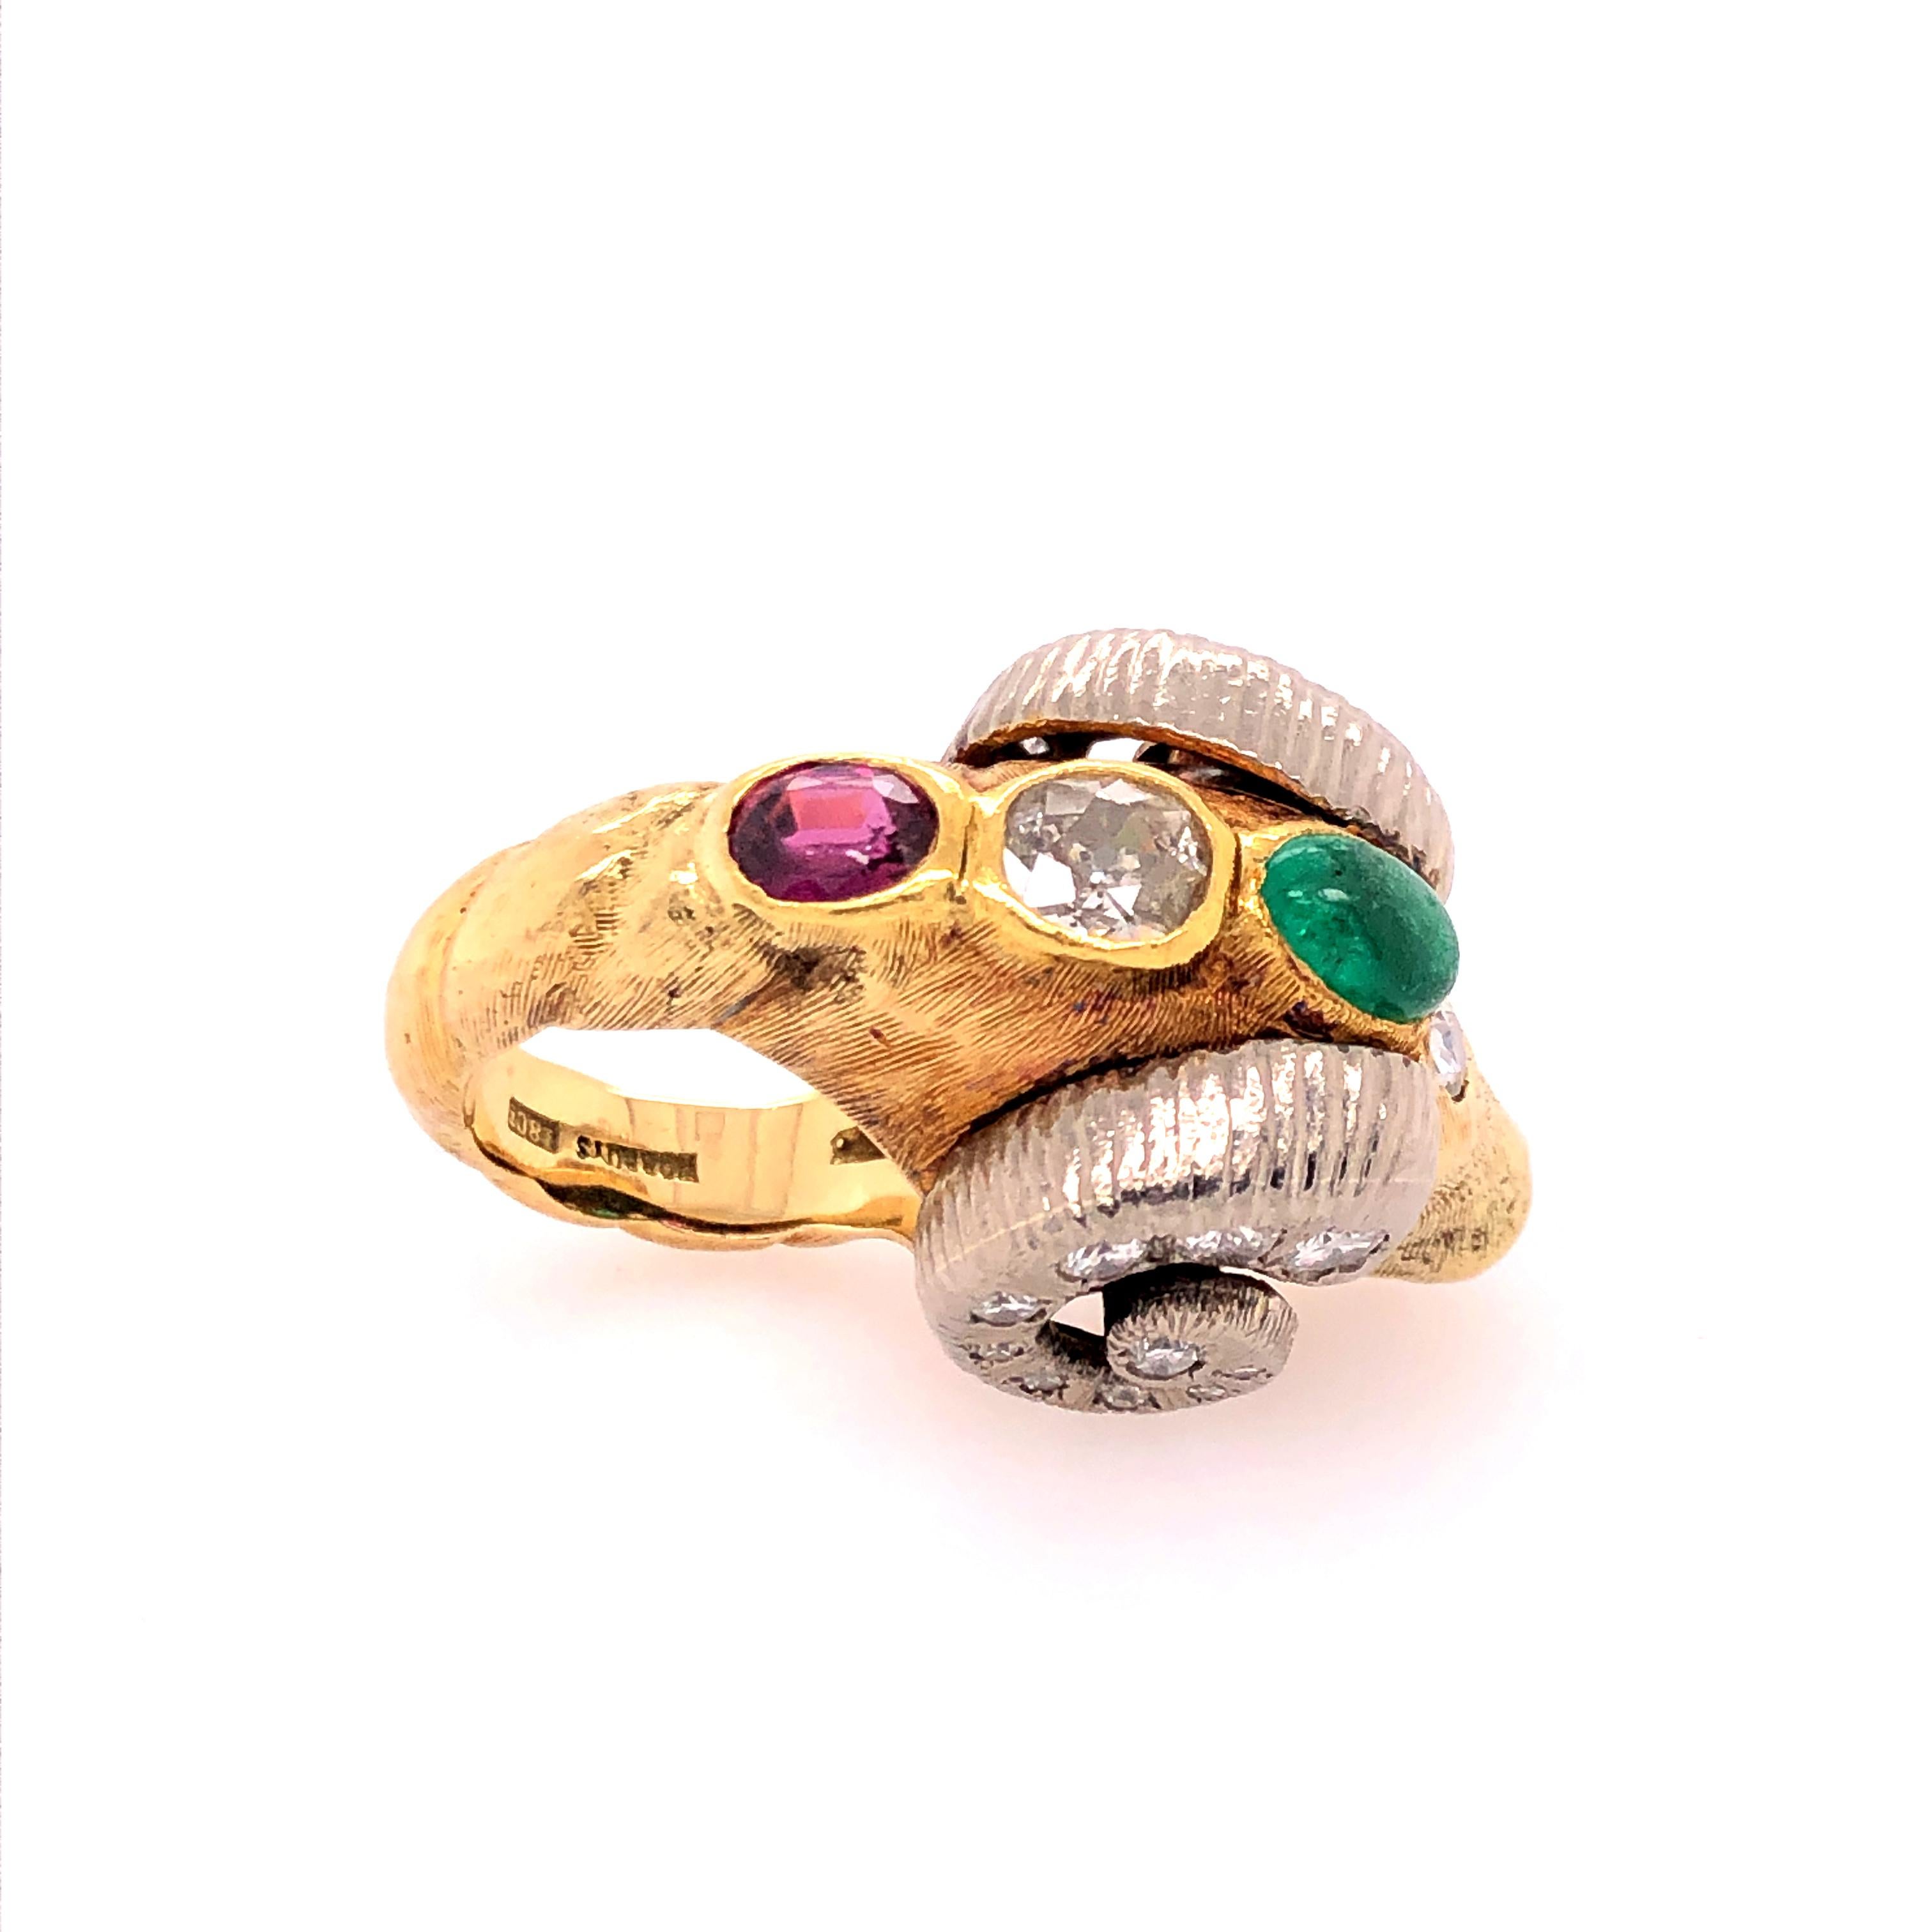 Artist Worboys Vintage Diamond and Gemstone Ram's Head Ring